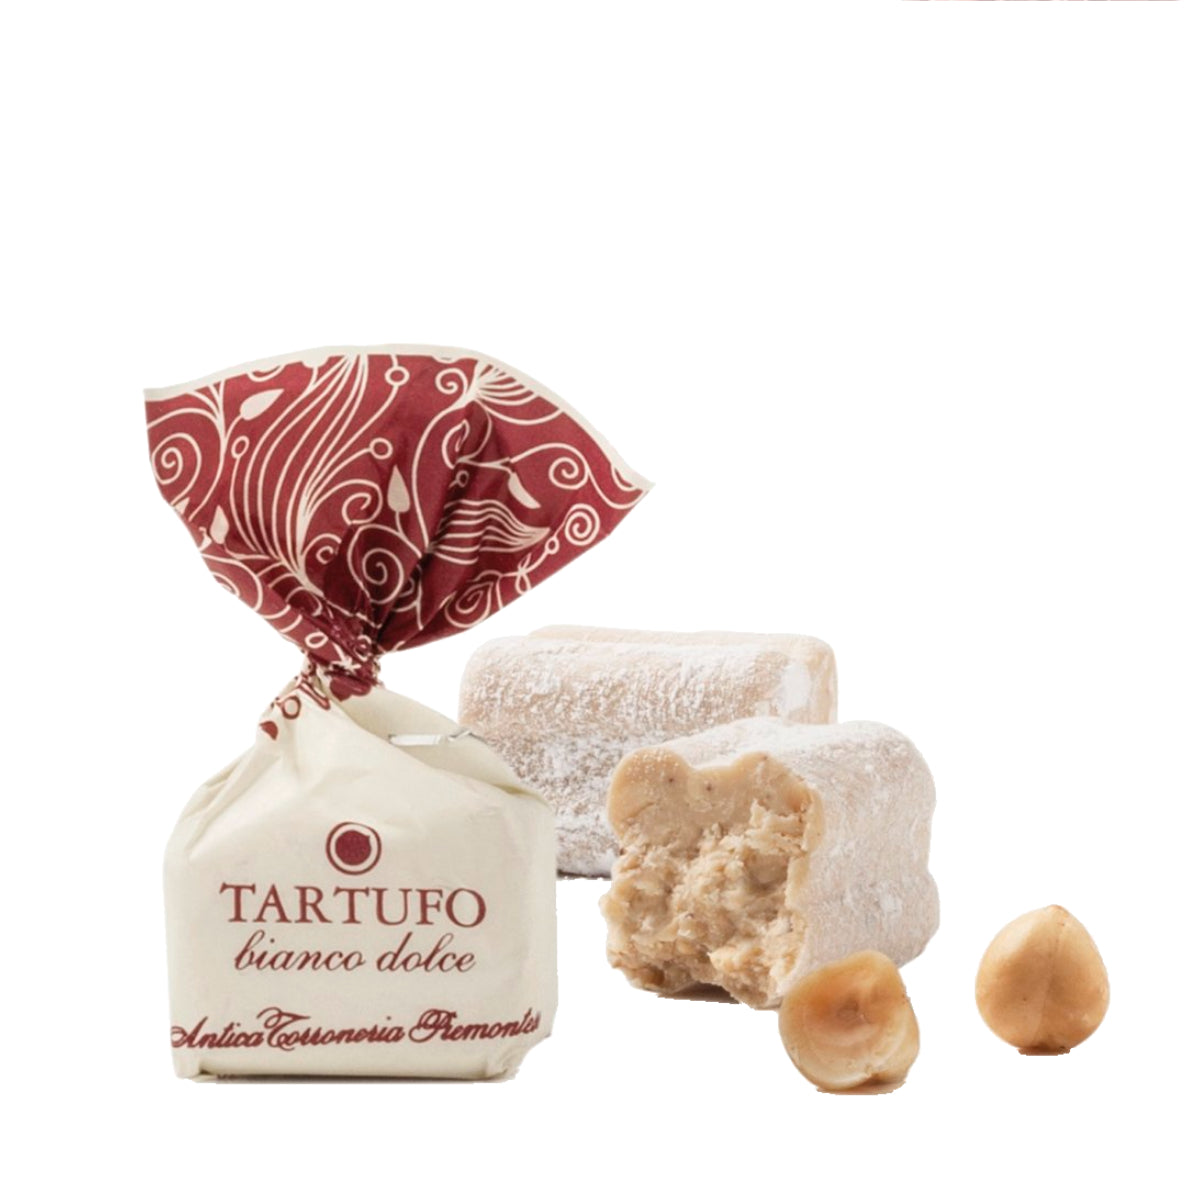 Tartufi hvid chokoladetrøffel med hasselnødder fra Antica Torroneria Piemontese hos Oliviers & Co